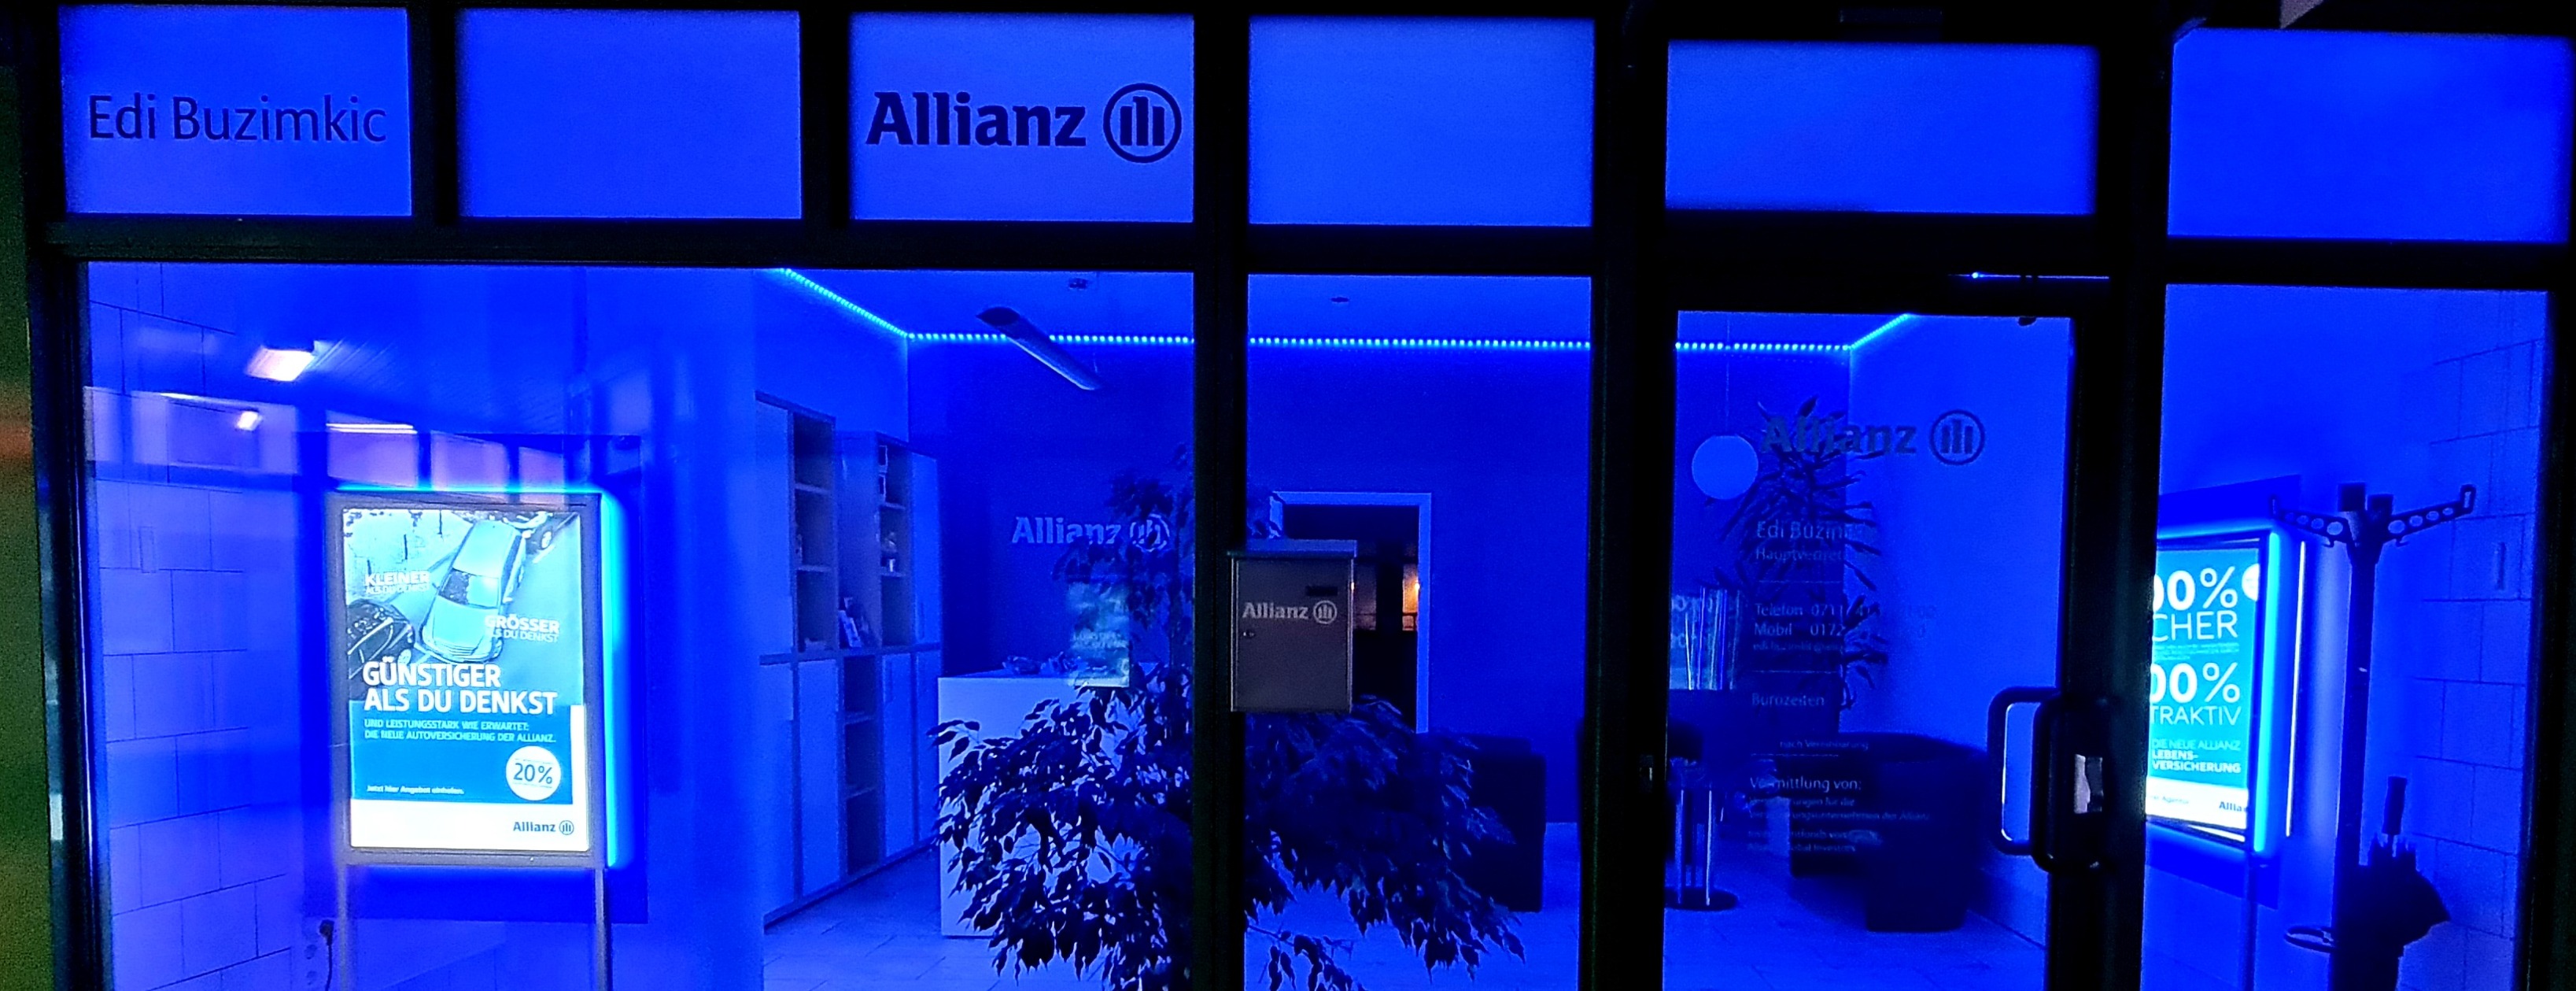 Allianz Versicherung Edi Buzimkic Stuttgart - hrvatska bosna hercegovina srbija osiguranje 